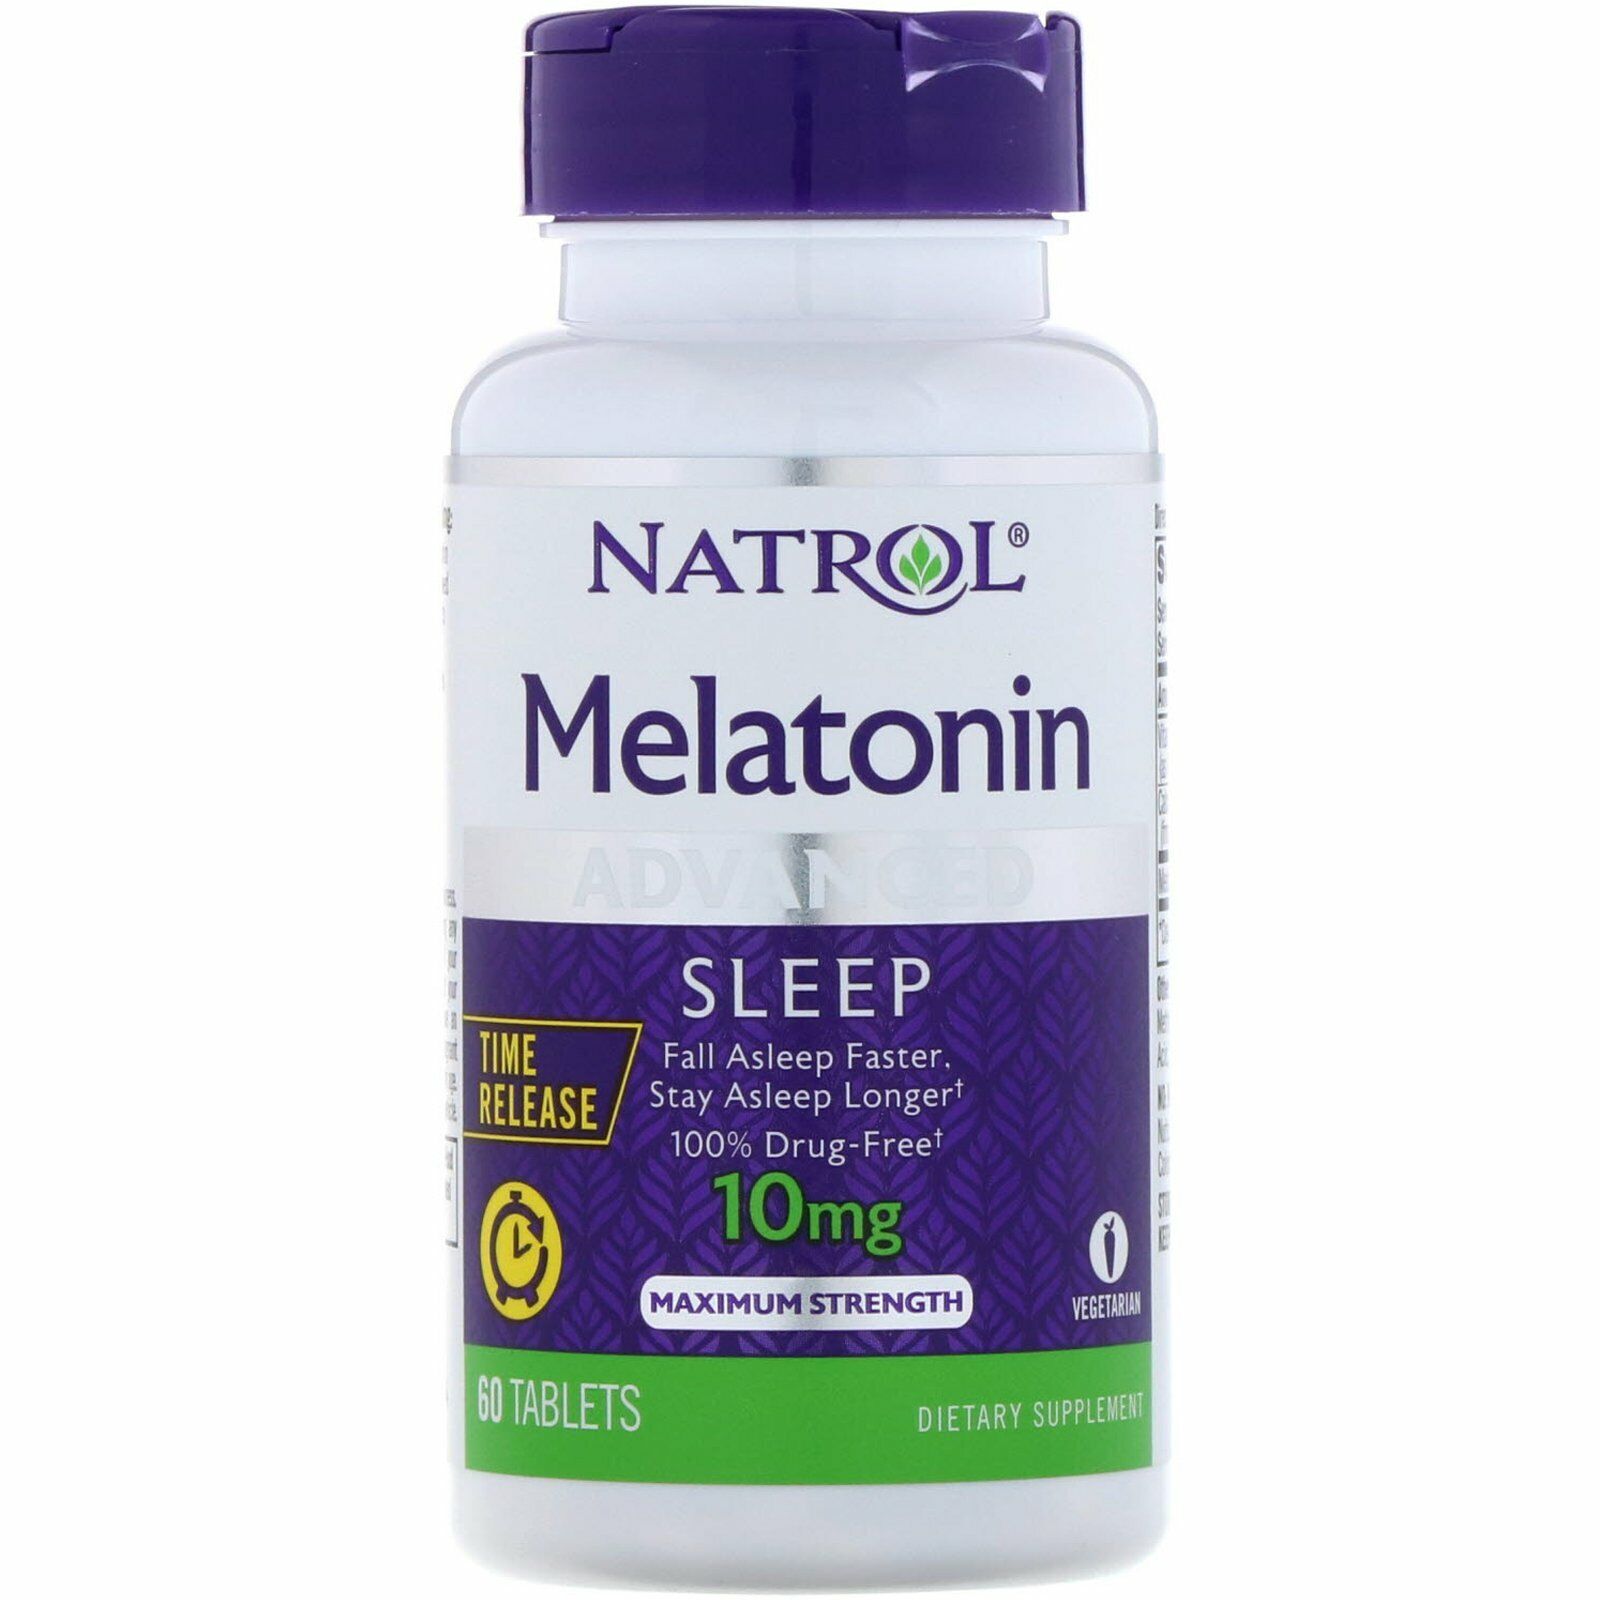 natrol melatonin advanced sleep